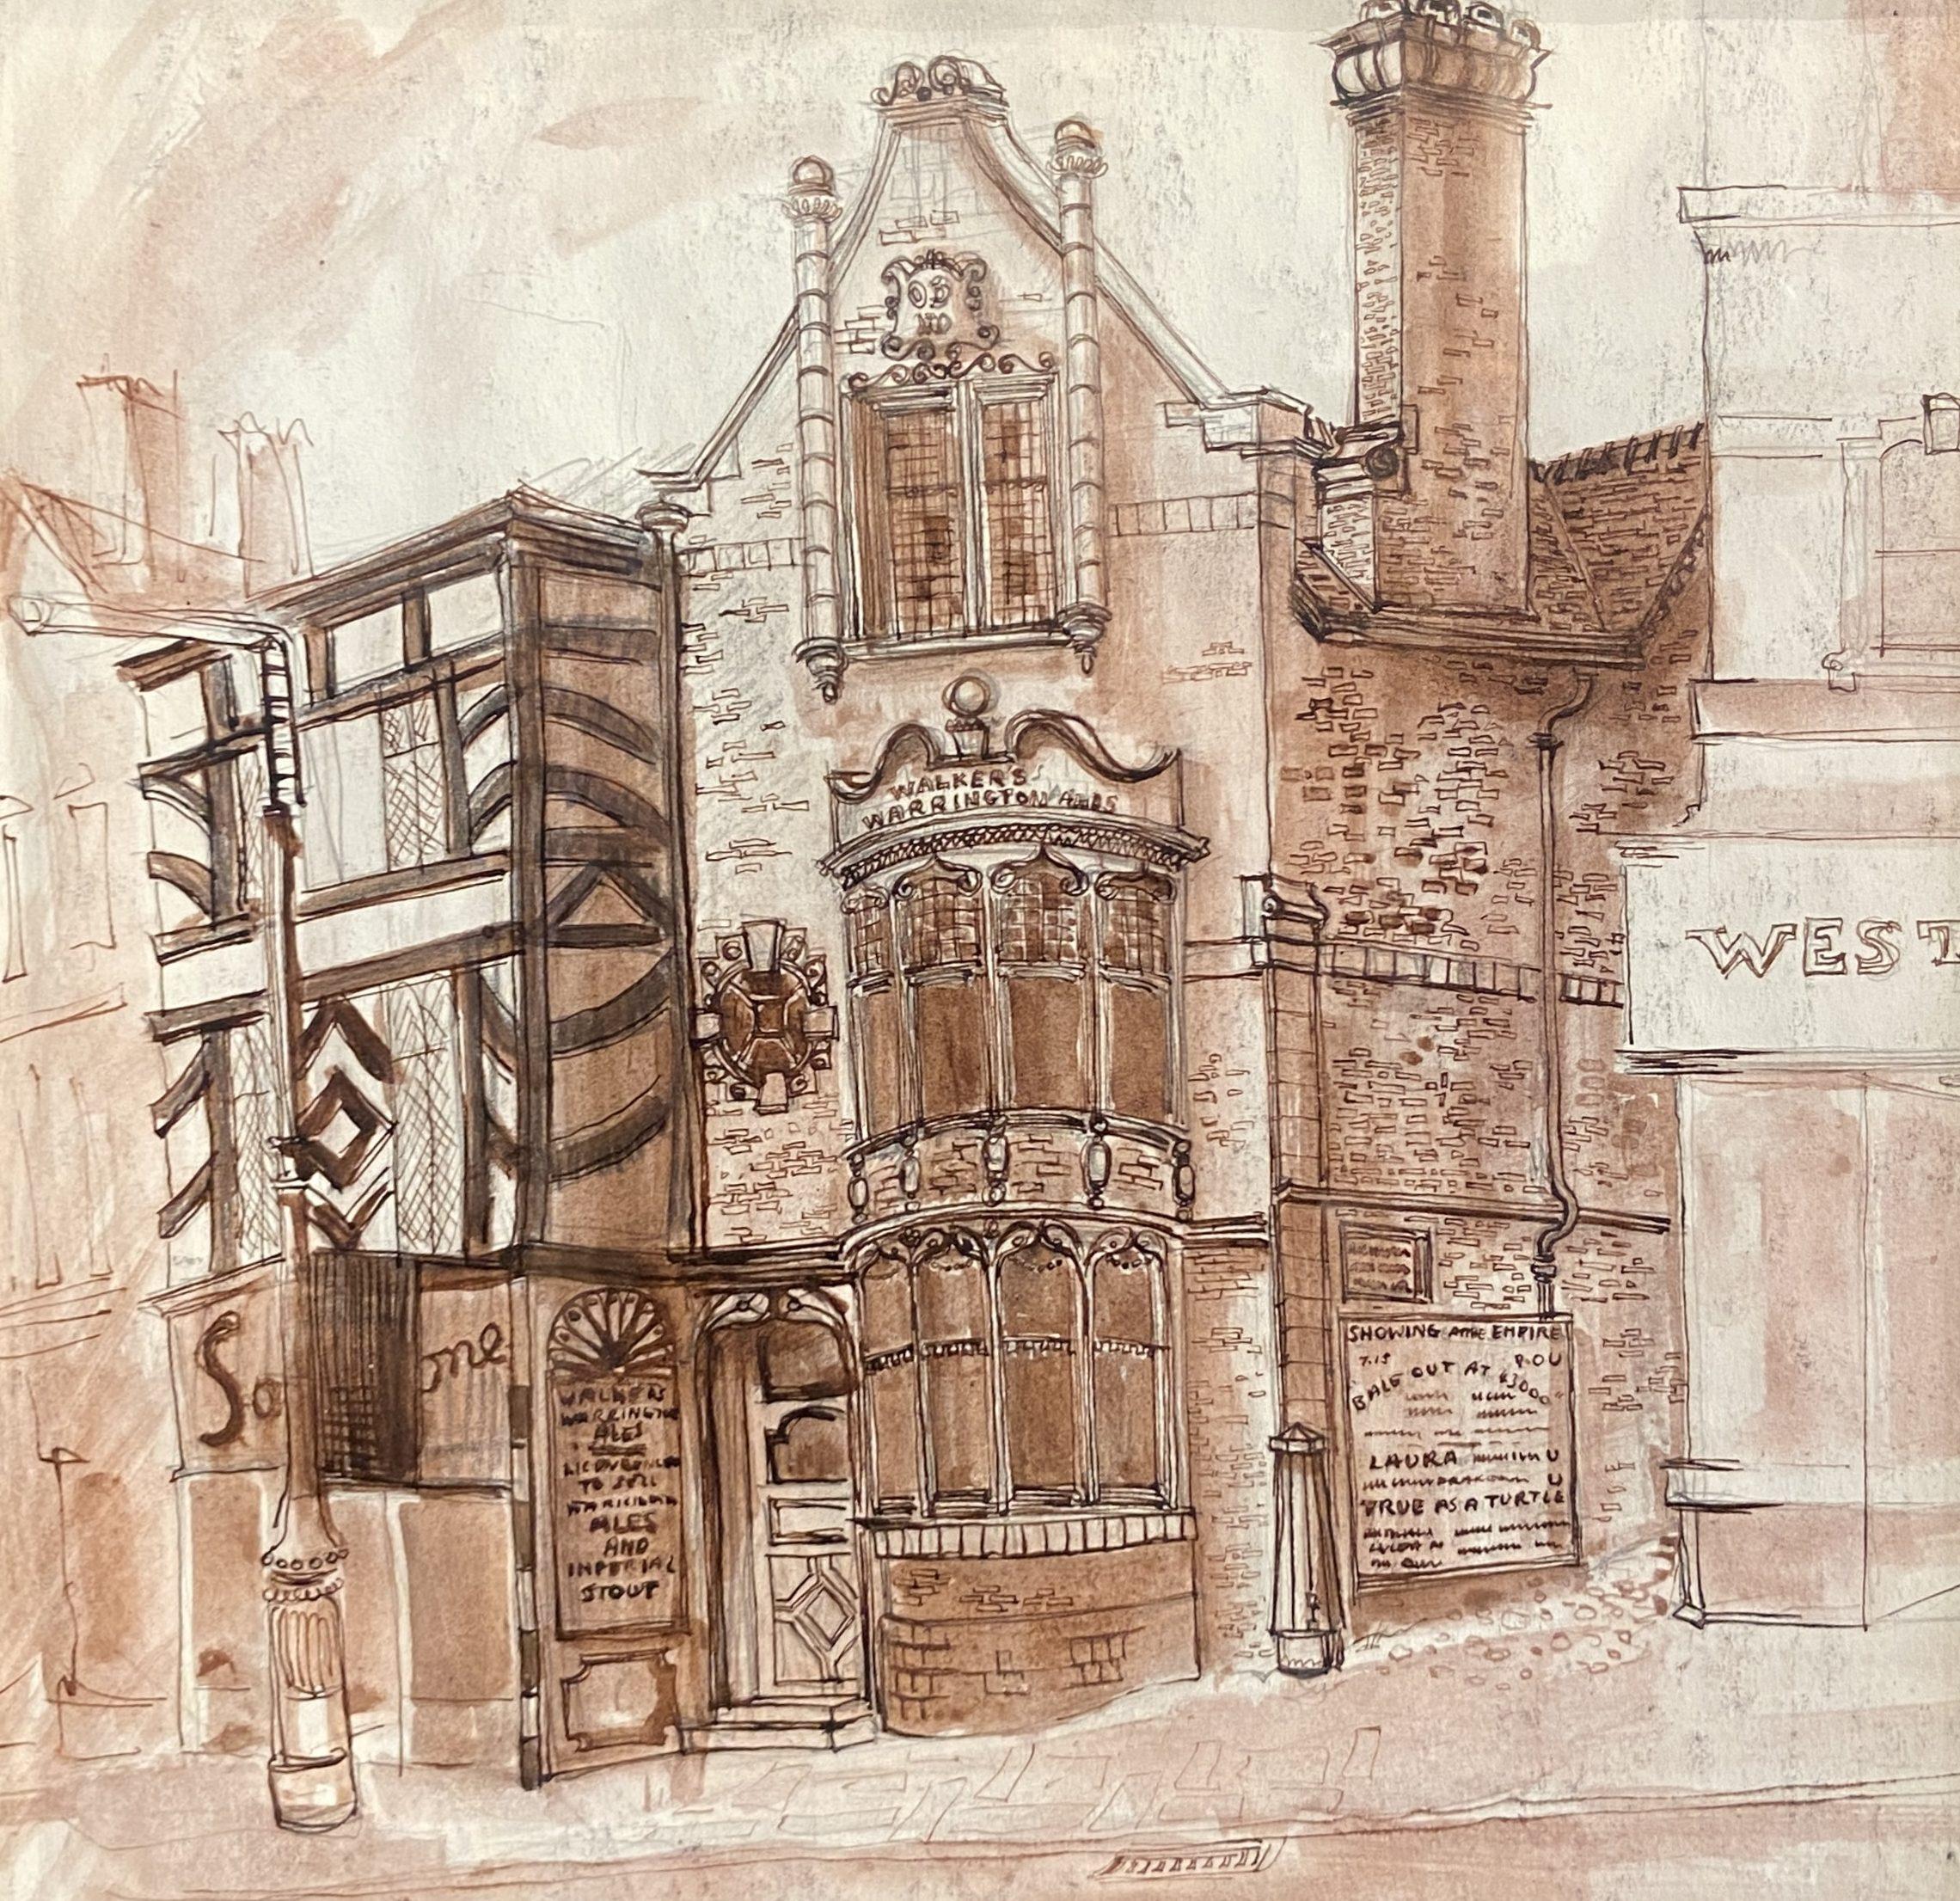 20th Century British School Figurative Art - Ink and Watercolour Sketches, Wigan School, 20th Century British